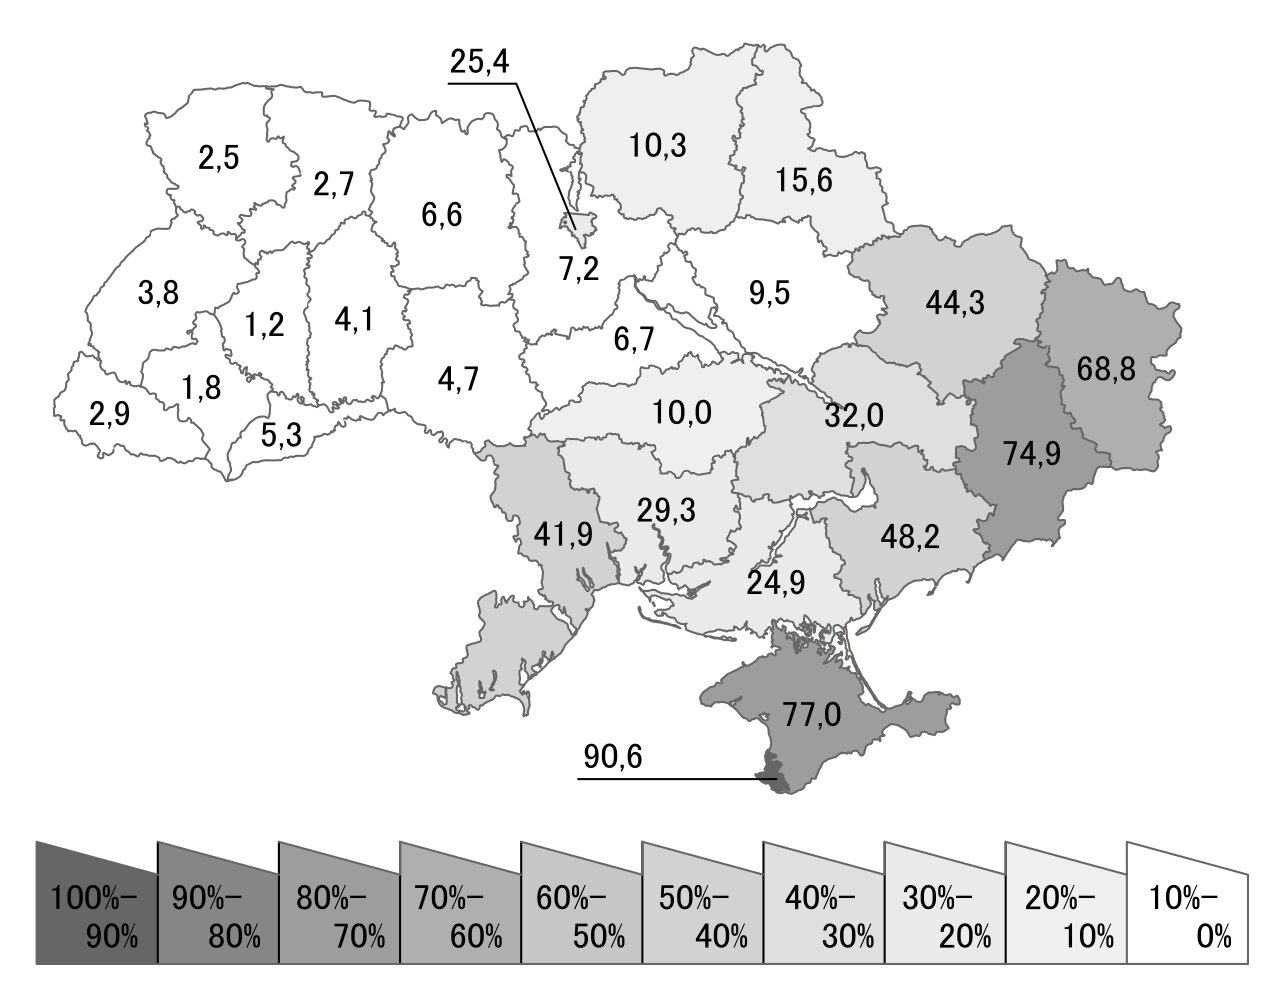 rusian language in Ukraine as native